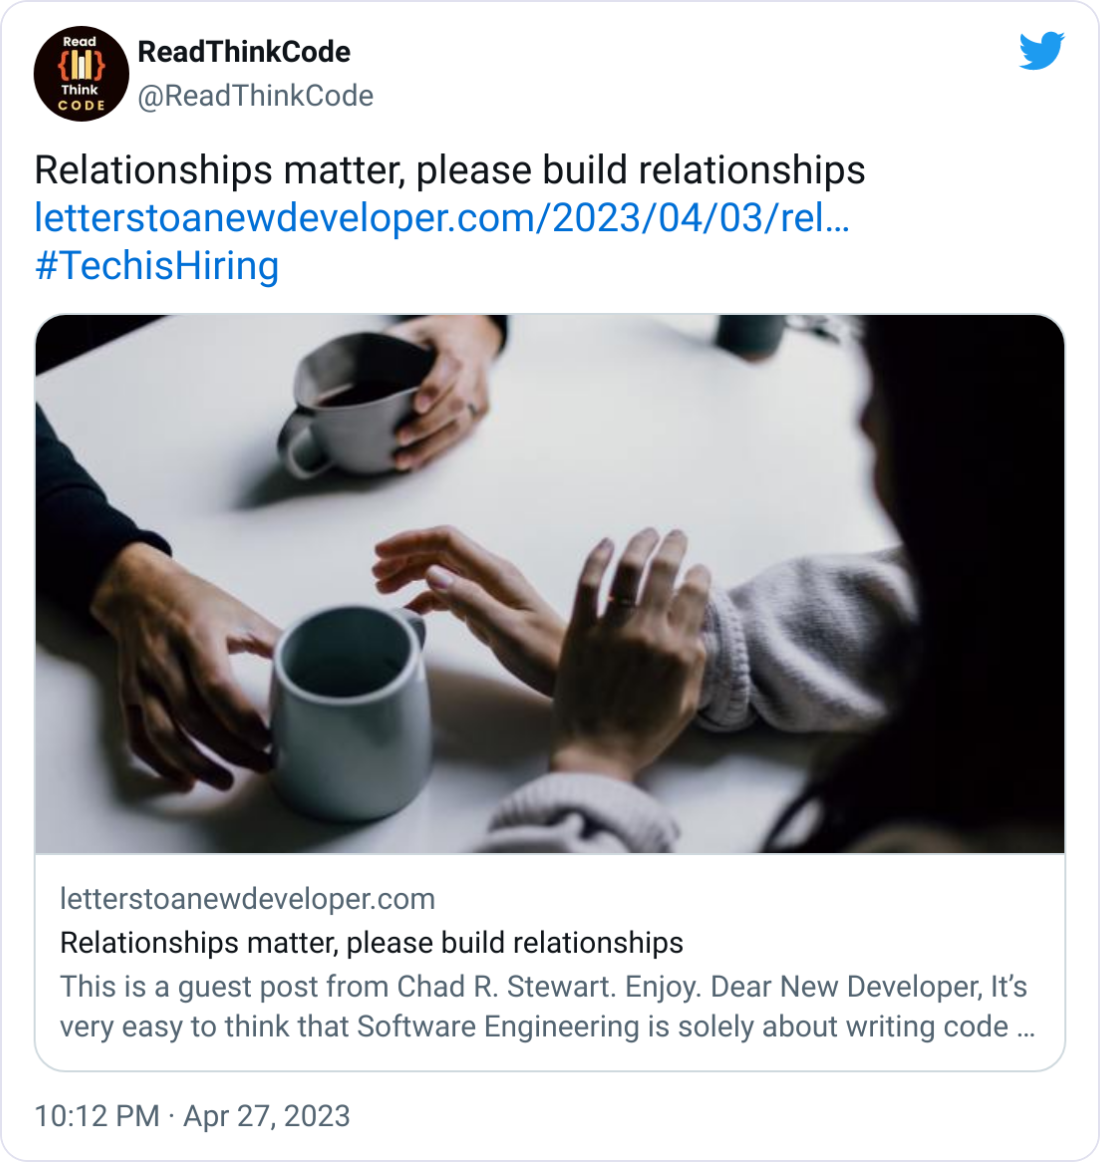 ReadThinkCode @ReadThinkCode Relationships matter, please build relationships https://letterstoanewdeveloper.com/2023/04/03/relationships-matter-please-build-relationships/  #TechisHiring